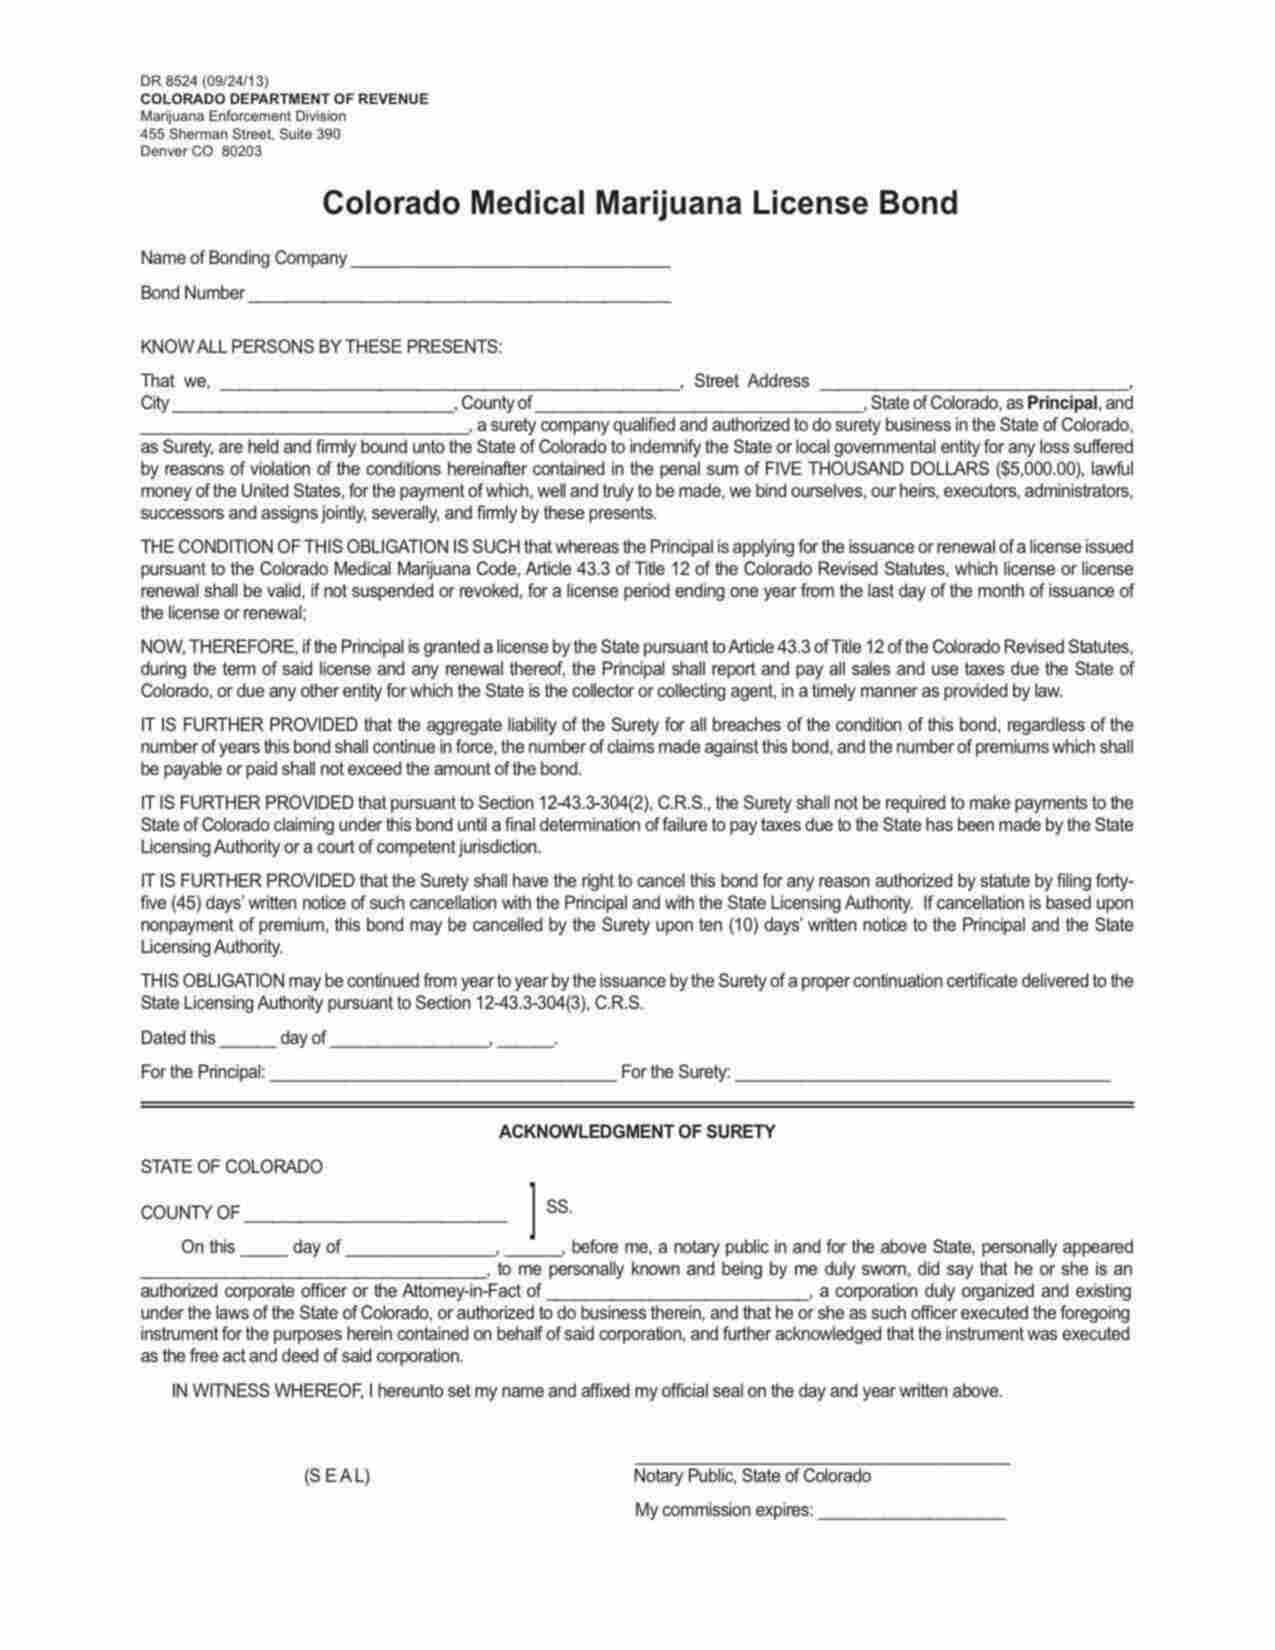 Colorado Medical Marijuana License Bond Form